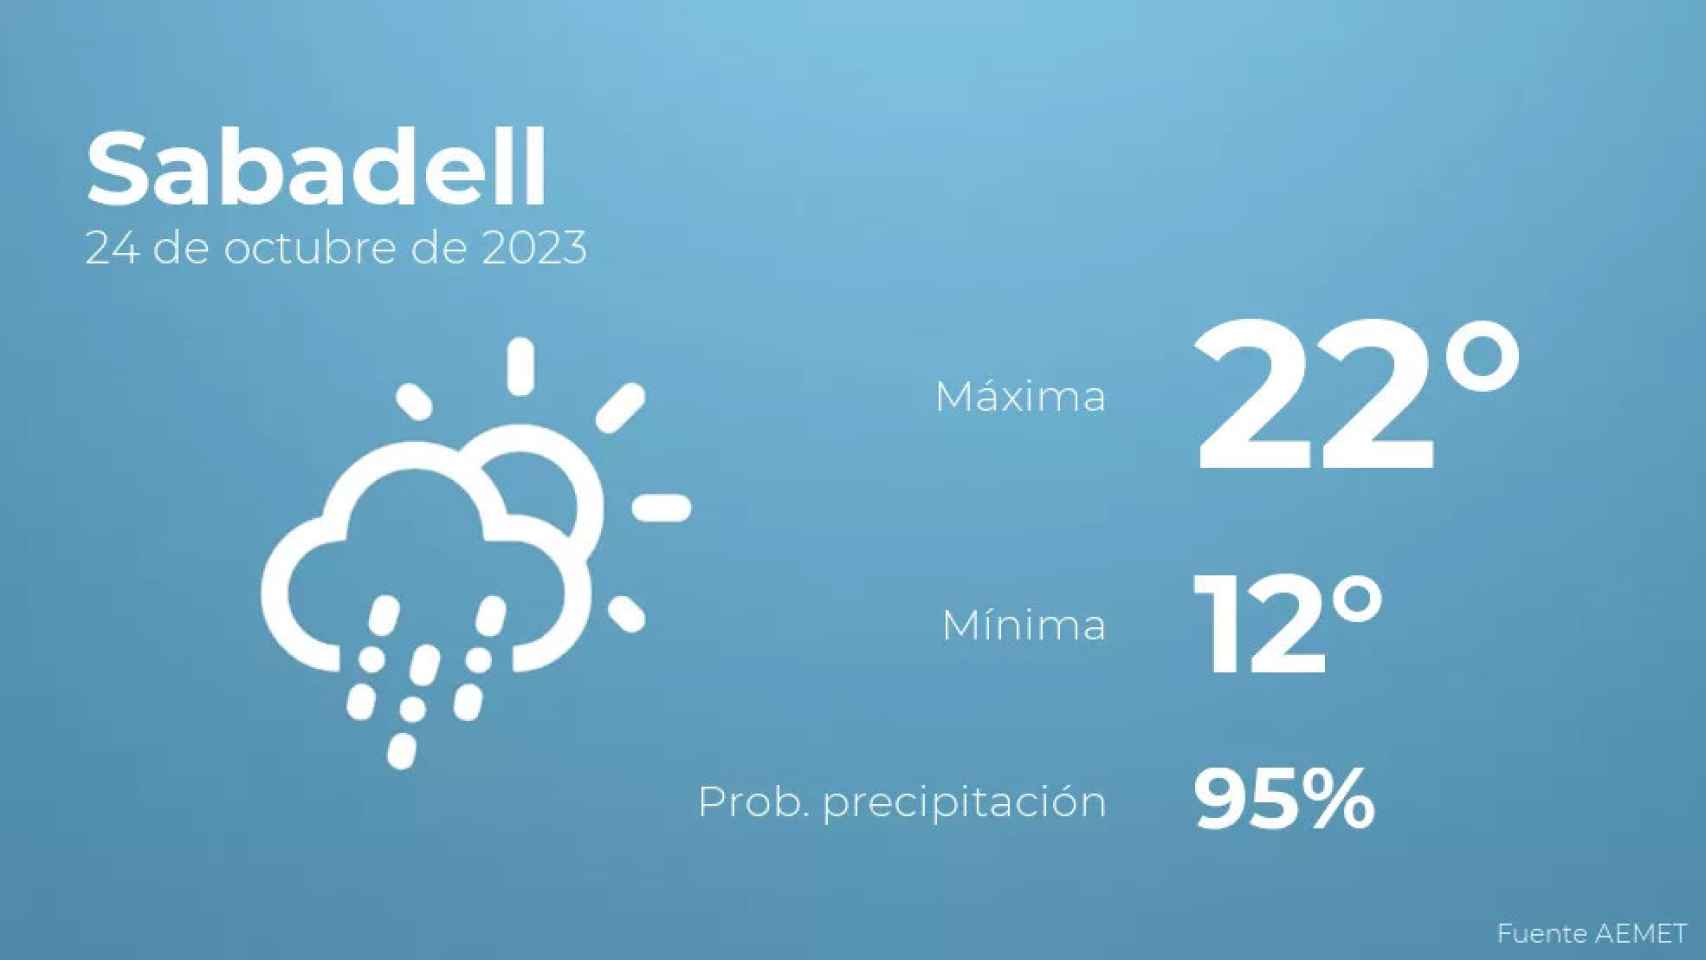 weather?weatherid=23&tempmax=22&tempmin=12&prep=95&city=Sabadell&date=24+de+octubre+de+2023&client=CRG&data provider=aemet